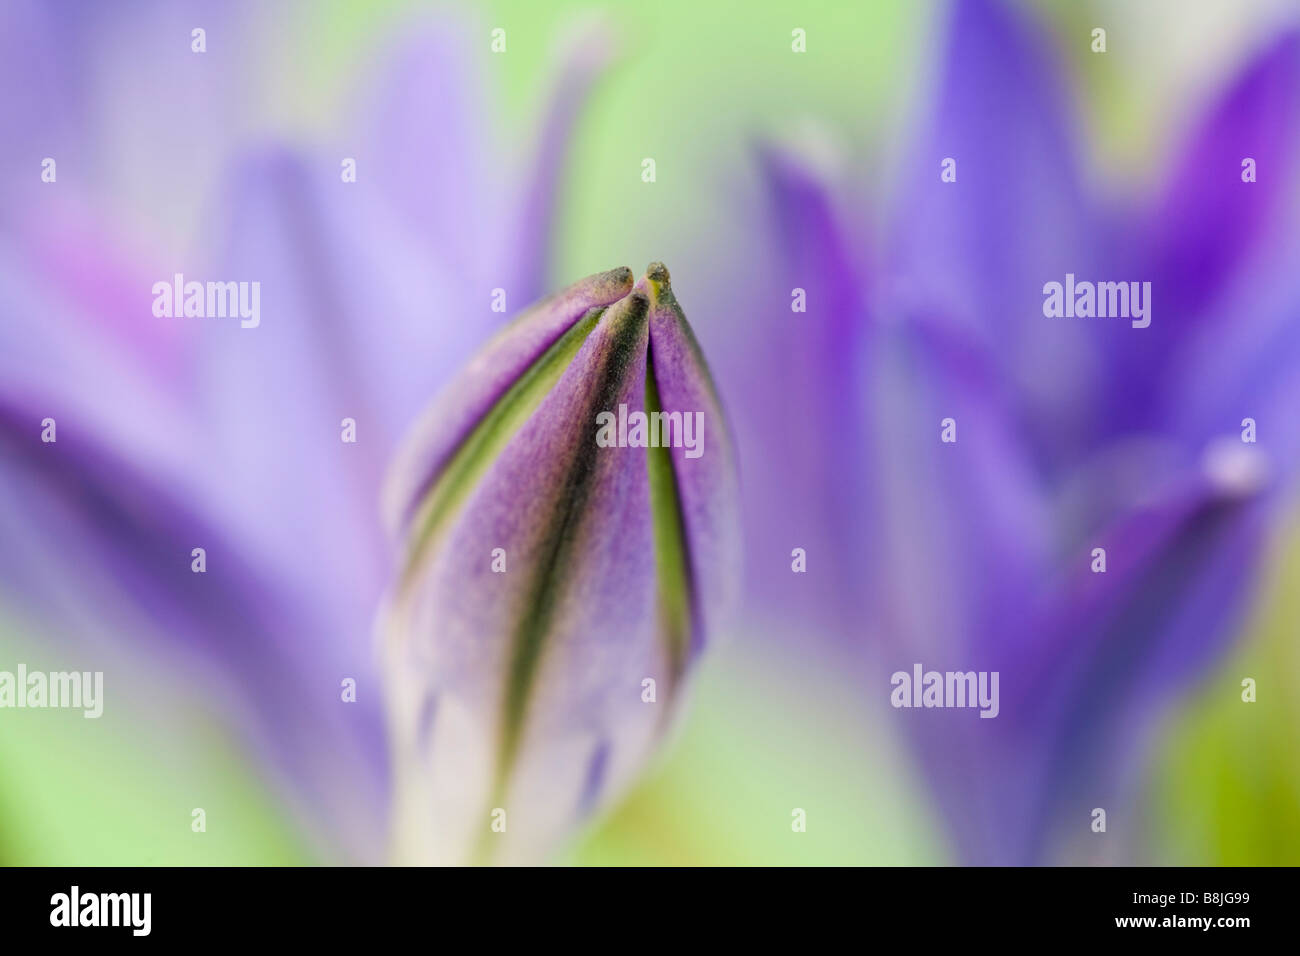 Triteleia laxa or Brodiaea laxa unopened pale purple blue flower in close up softly diffused Stock Photo